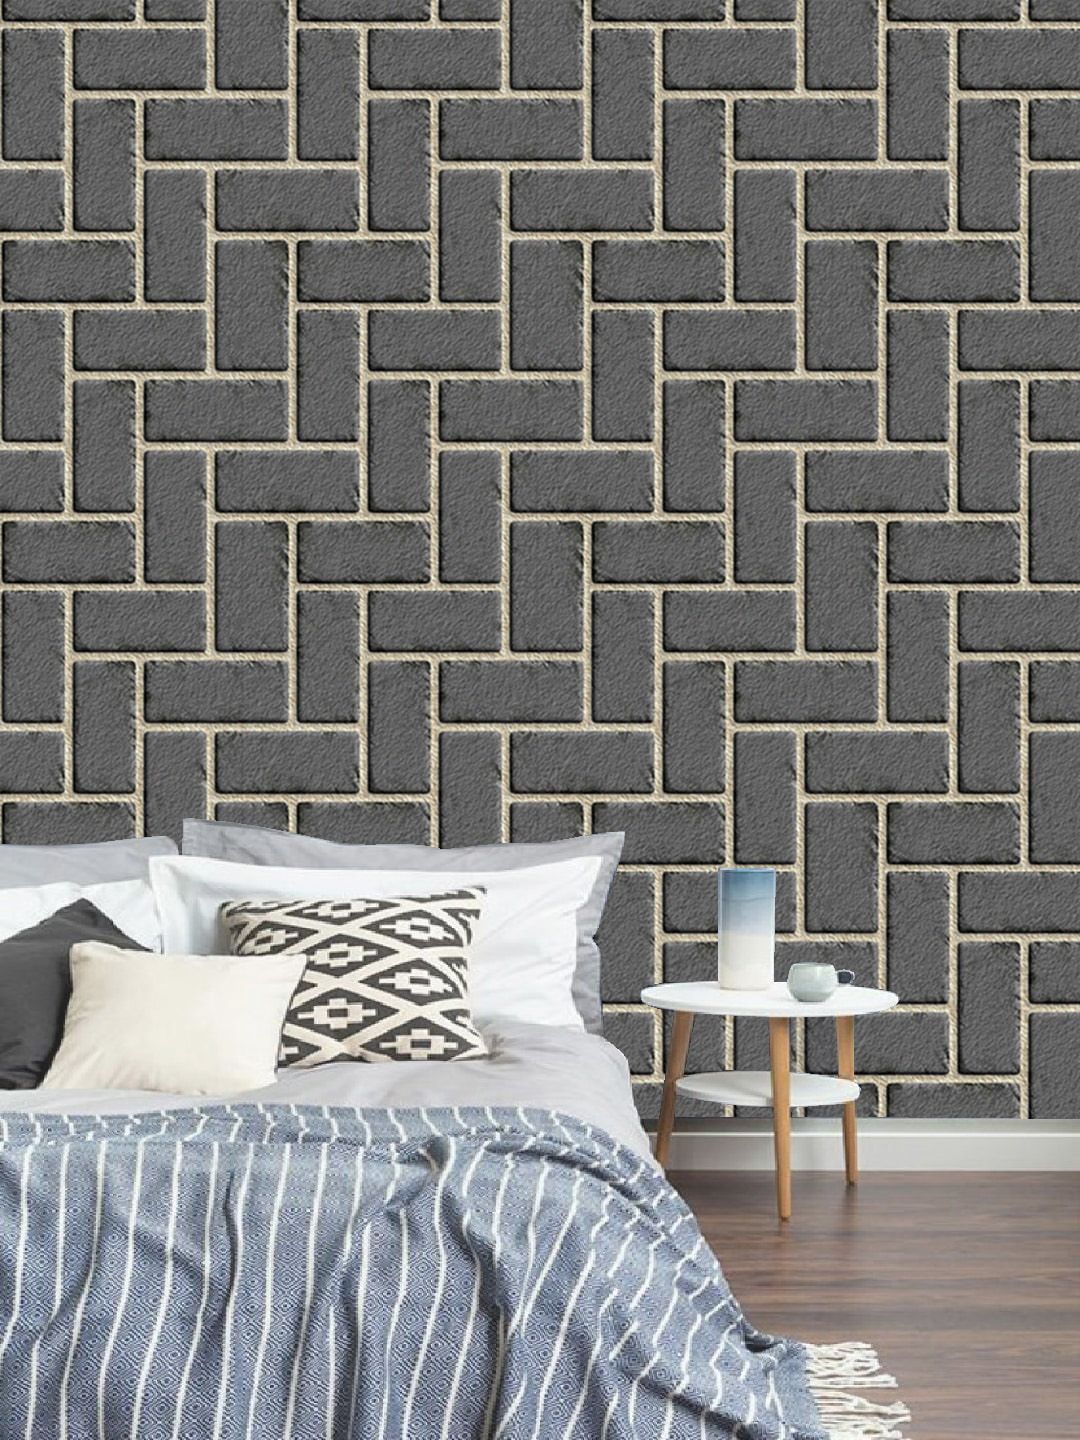 Jaamso Royals Grey Brick Stone Wallpaper Price in India